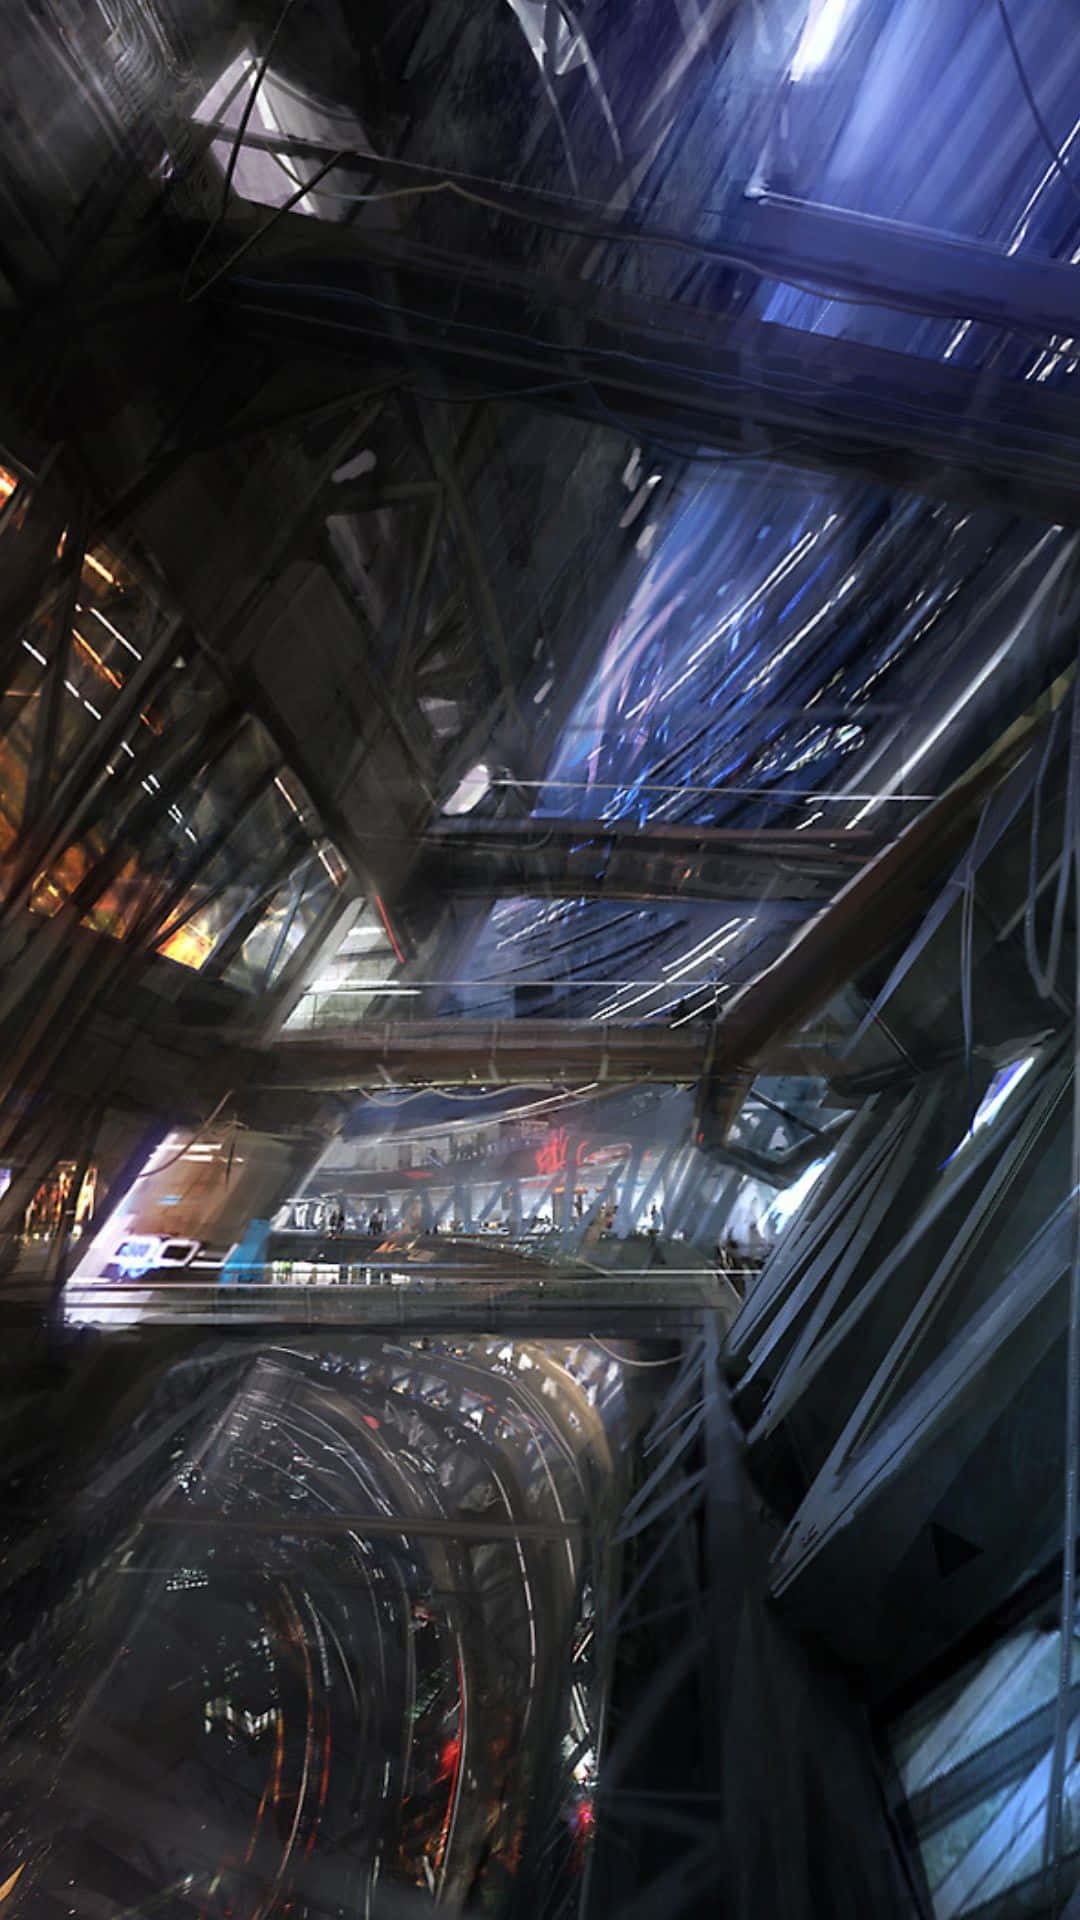 Impresionantevista De La Ciudadela De Mass Effect Con Luces Vibrantes Y Arquitectura Futurista. Fondo de pantalla